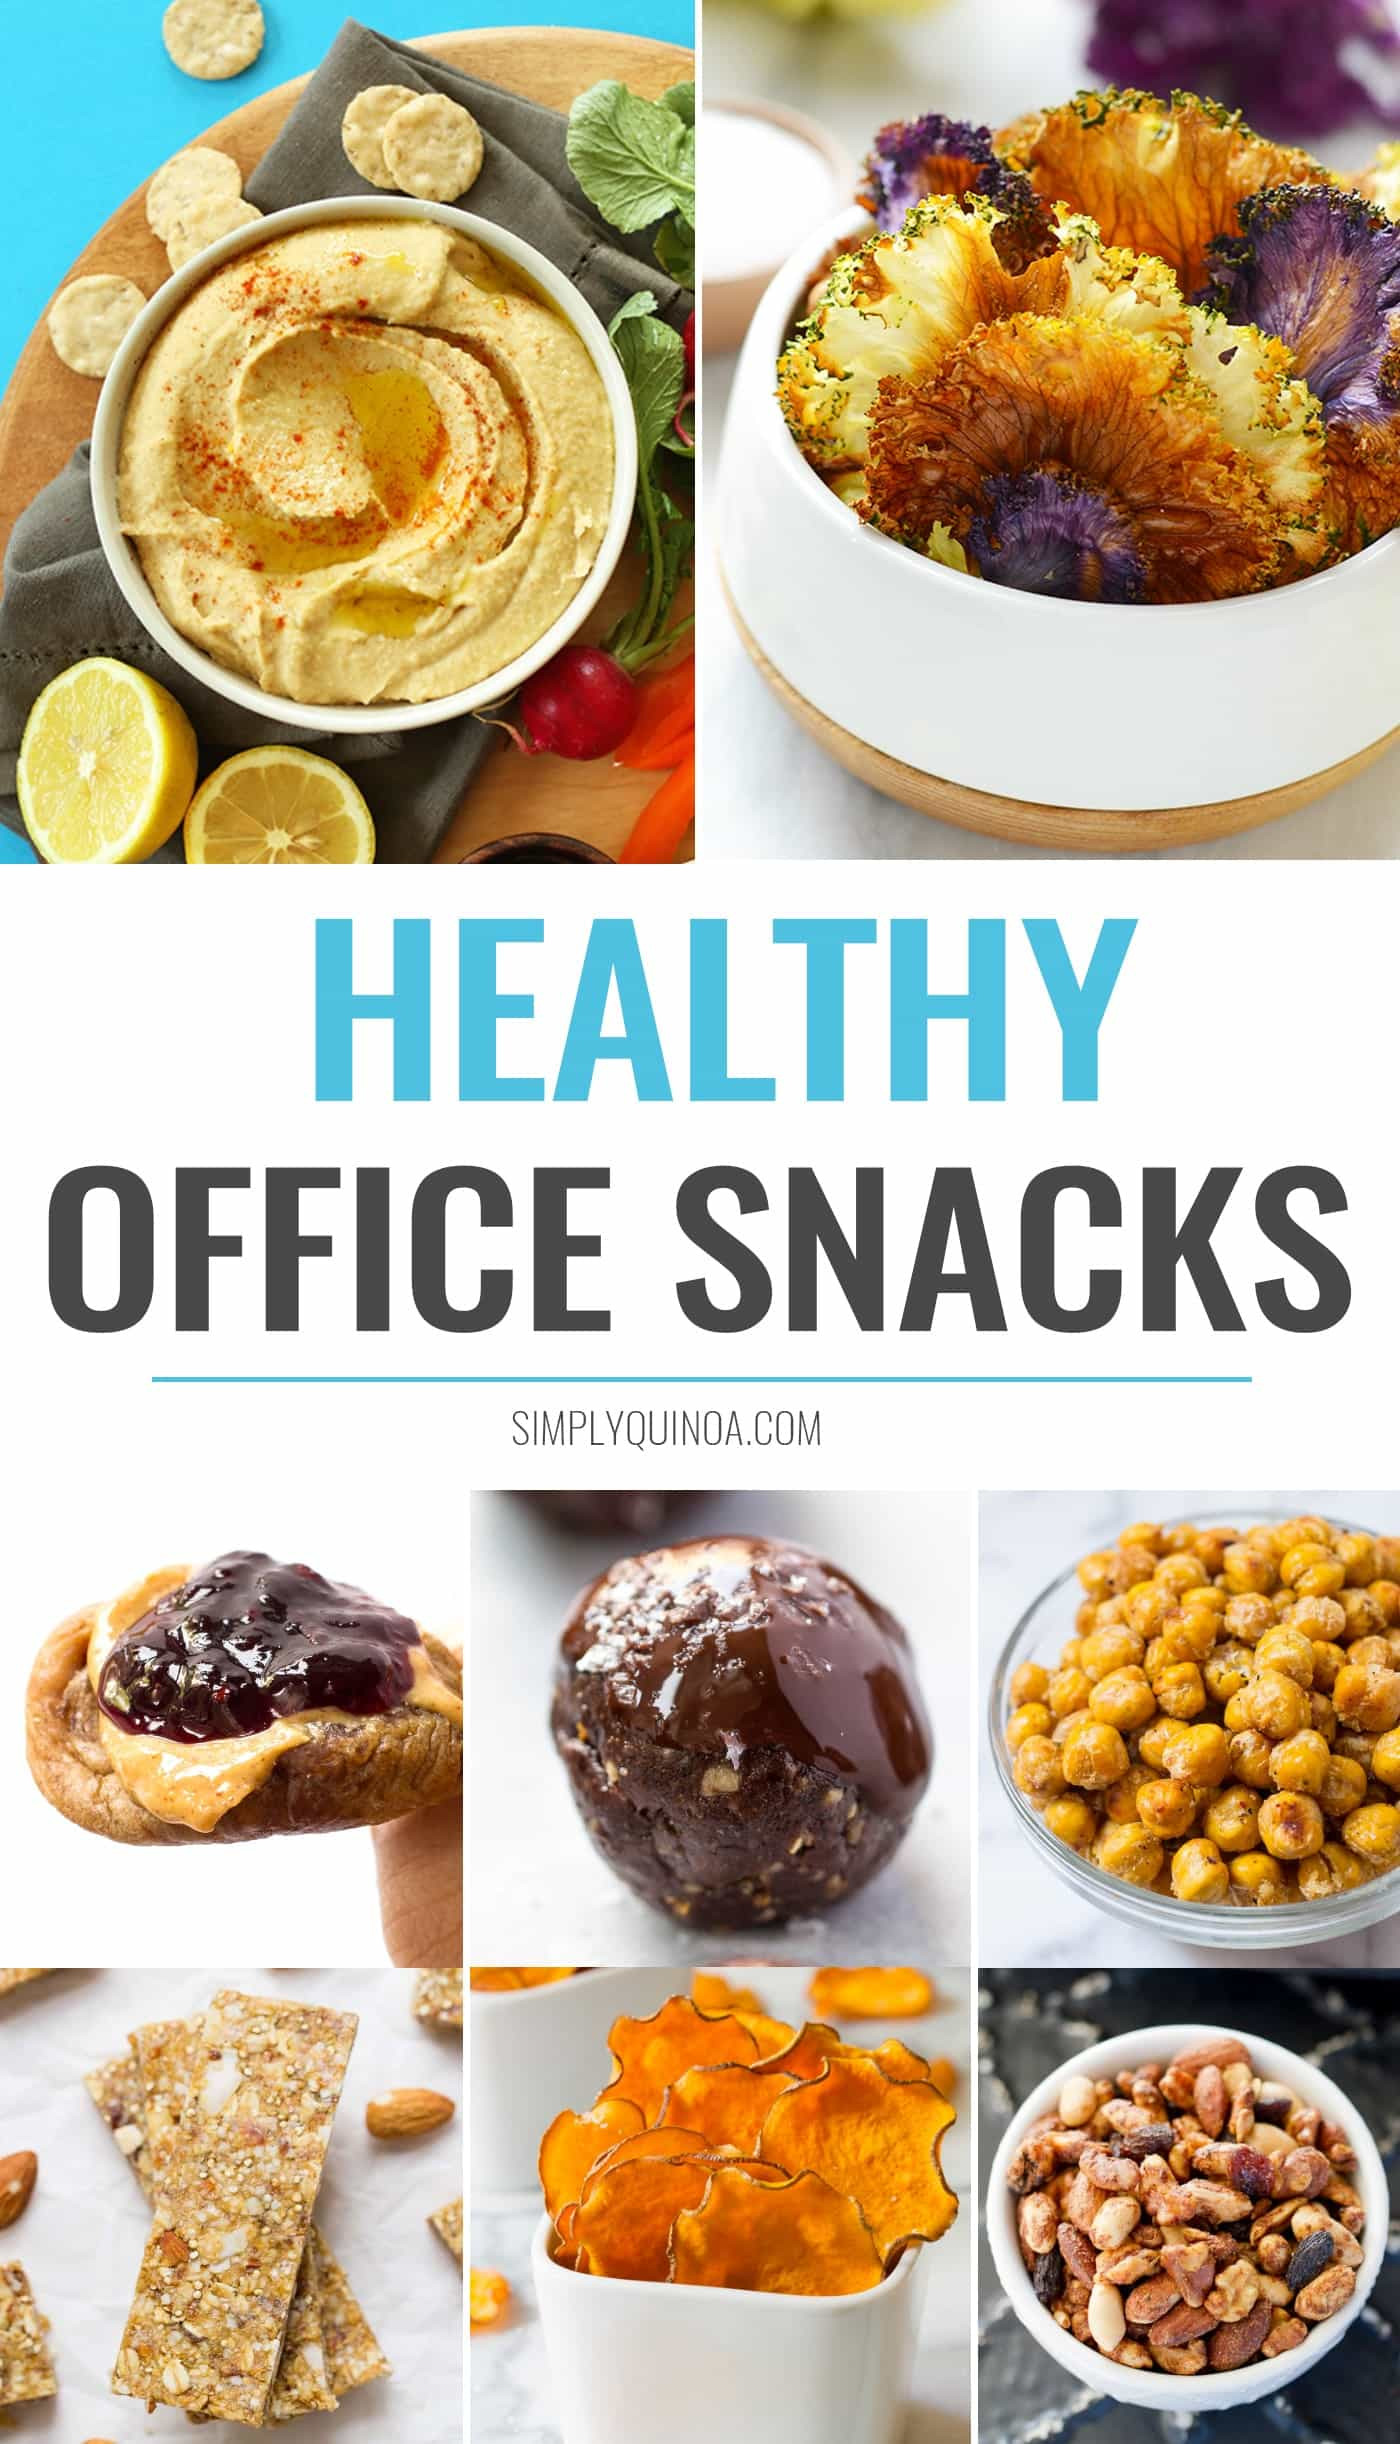 Favorite Healthy Snacks
 The 12 Best Healthy fice Snacks Simply Quinoa